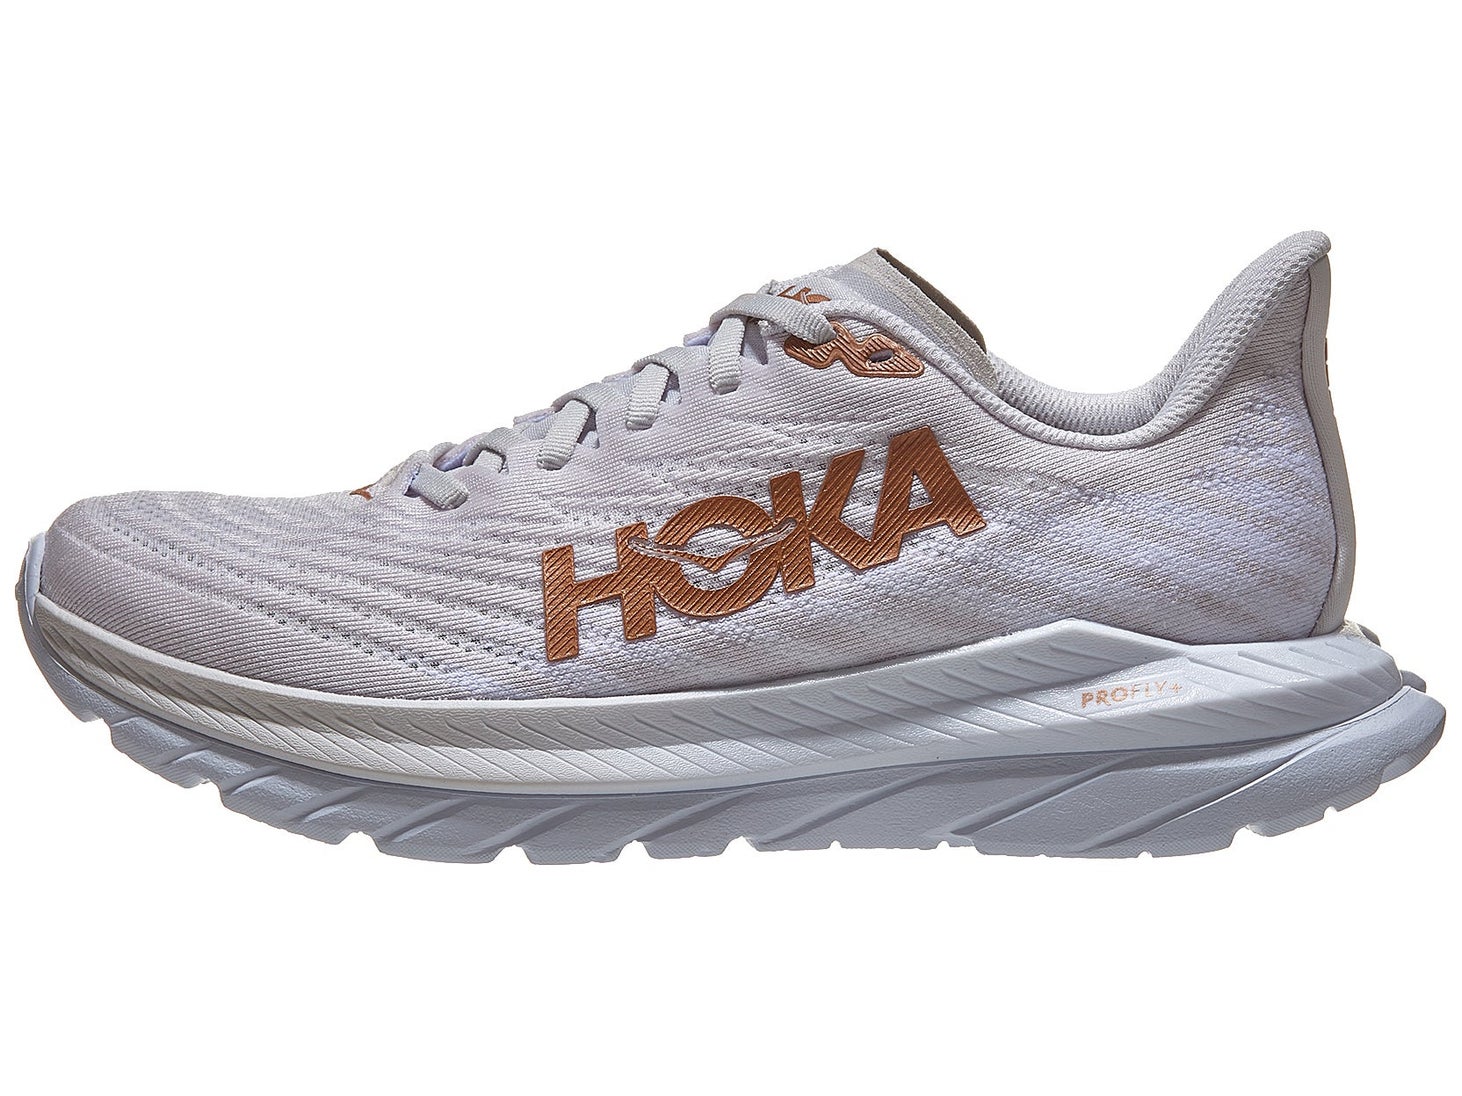 HOKA Mach 5 Women's Shoes White/Copper | Running Warehouse